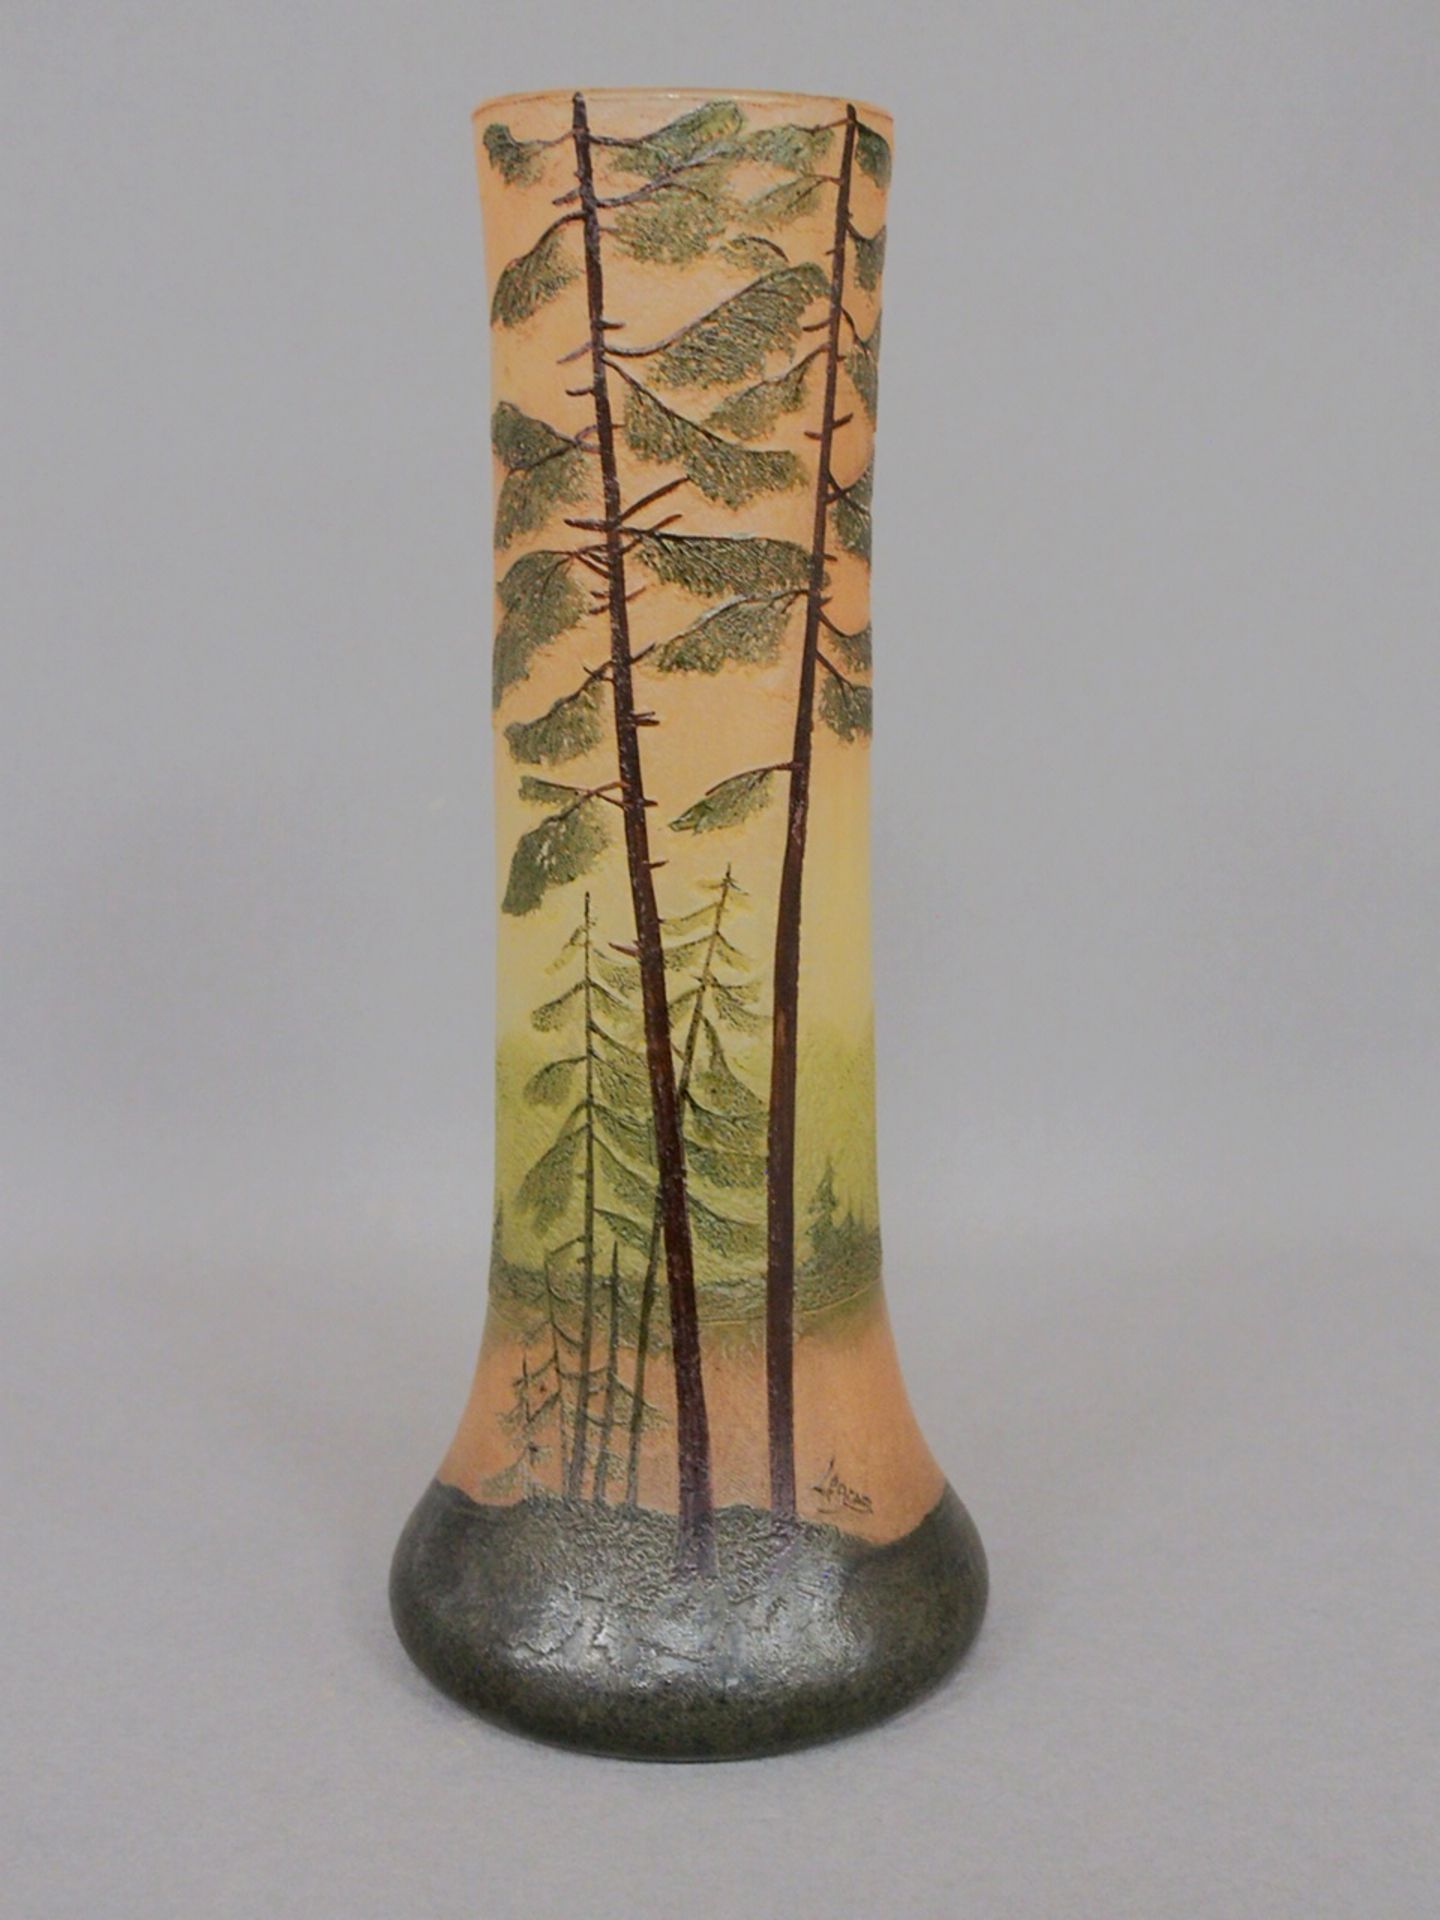 Vase - Image 2 of 3